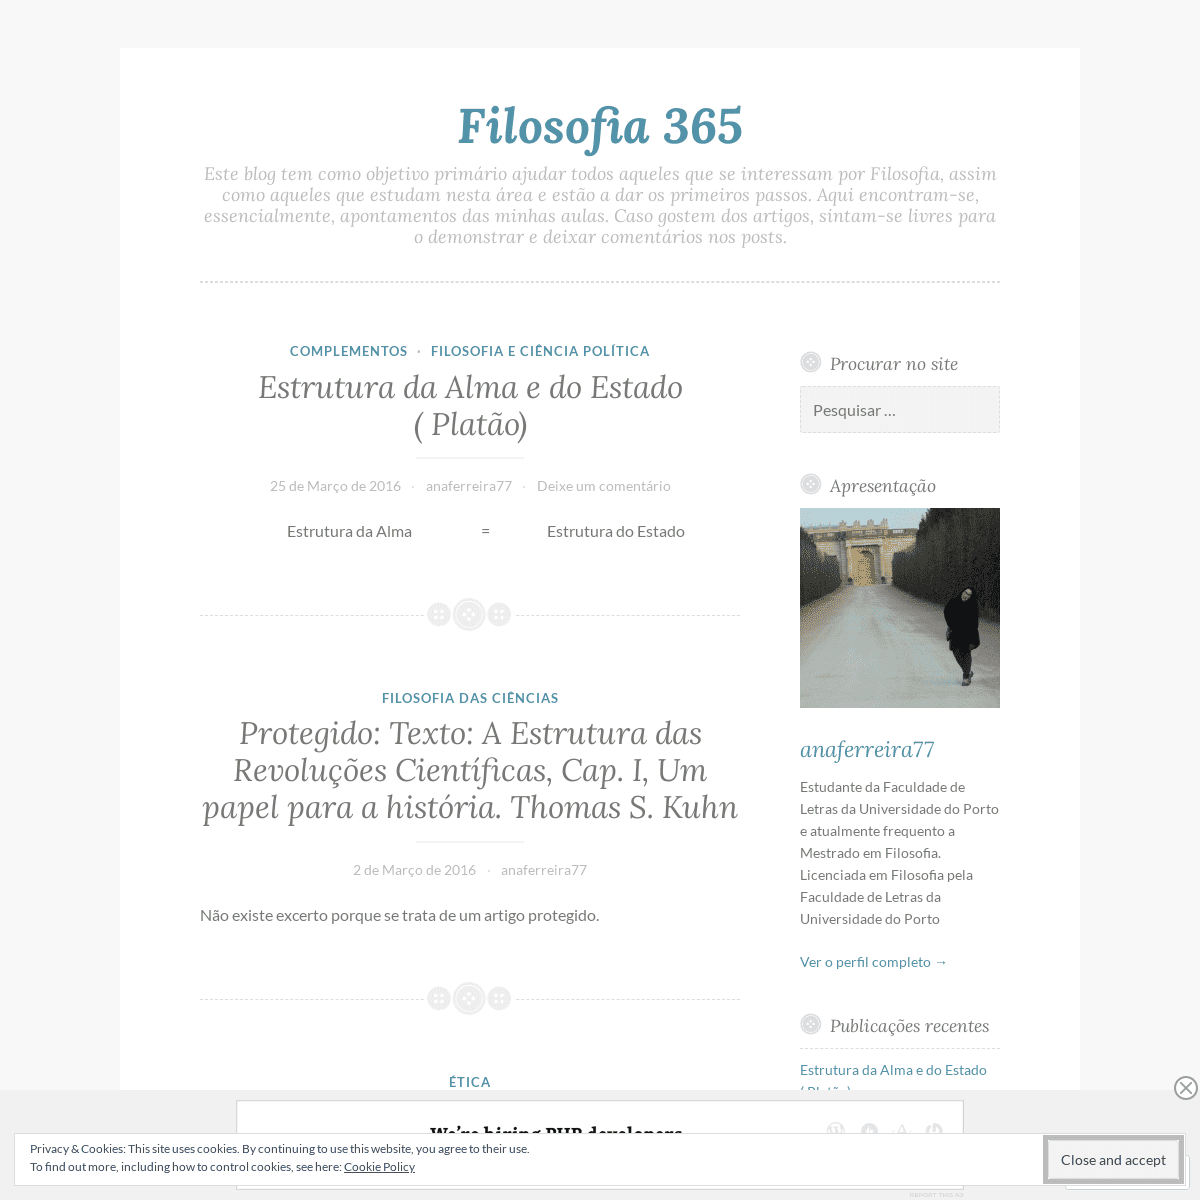 A complete backup of filosofia365.wordpress.com